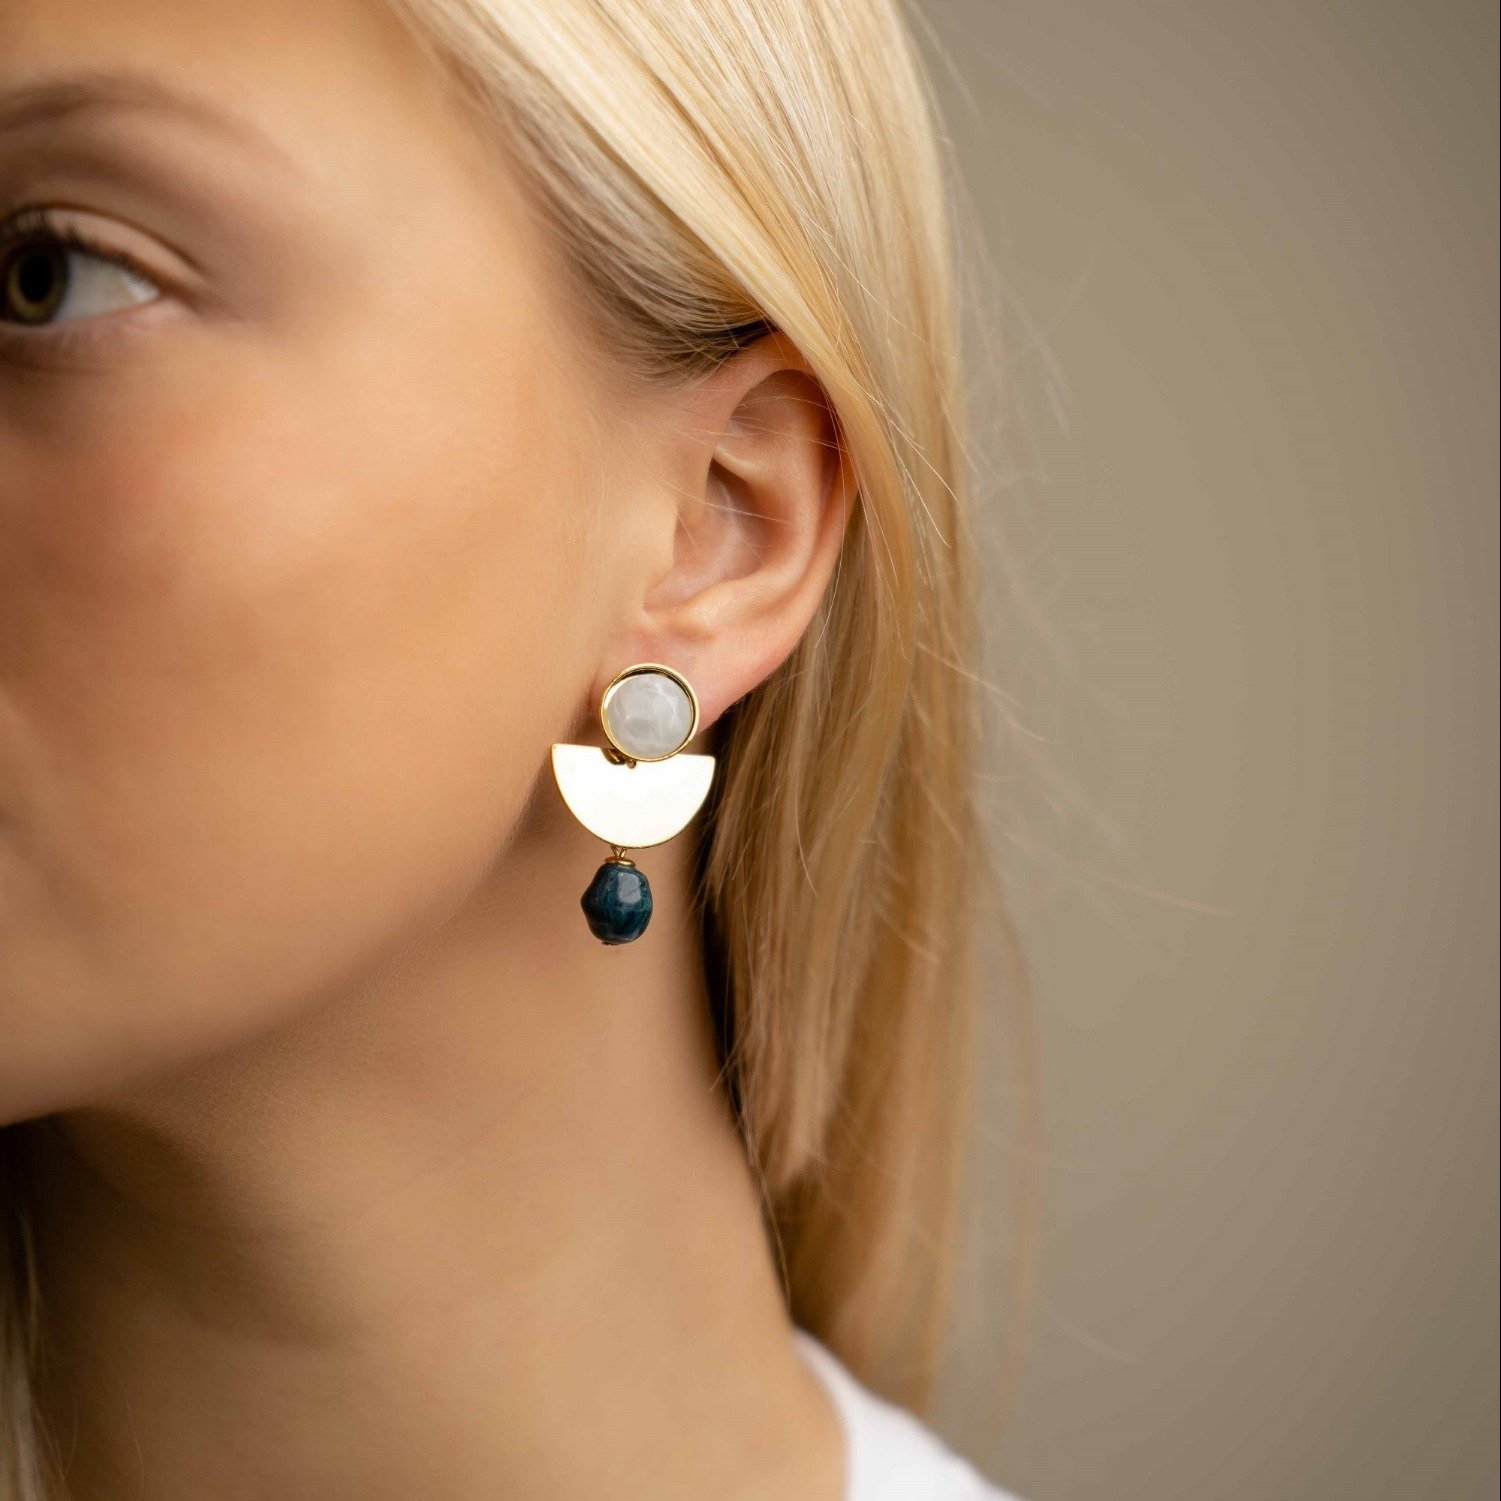 Athena grey/green earrings